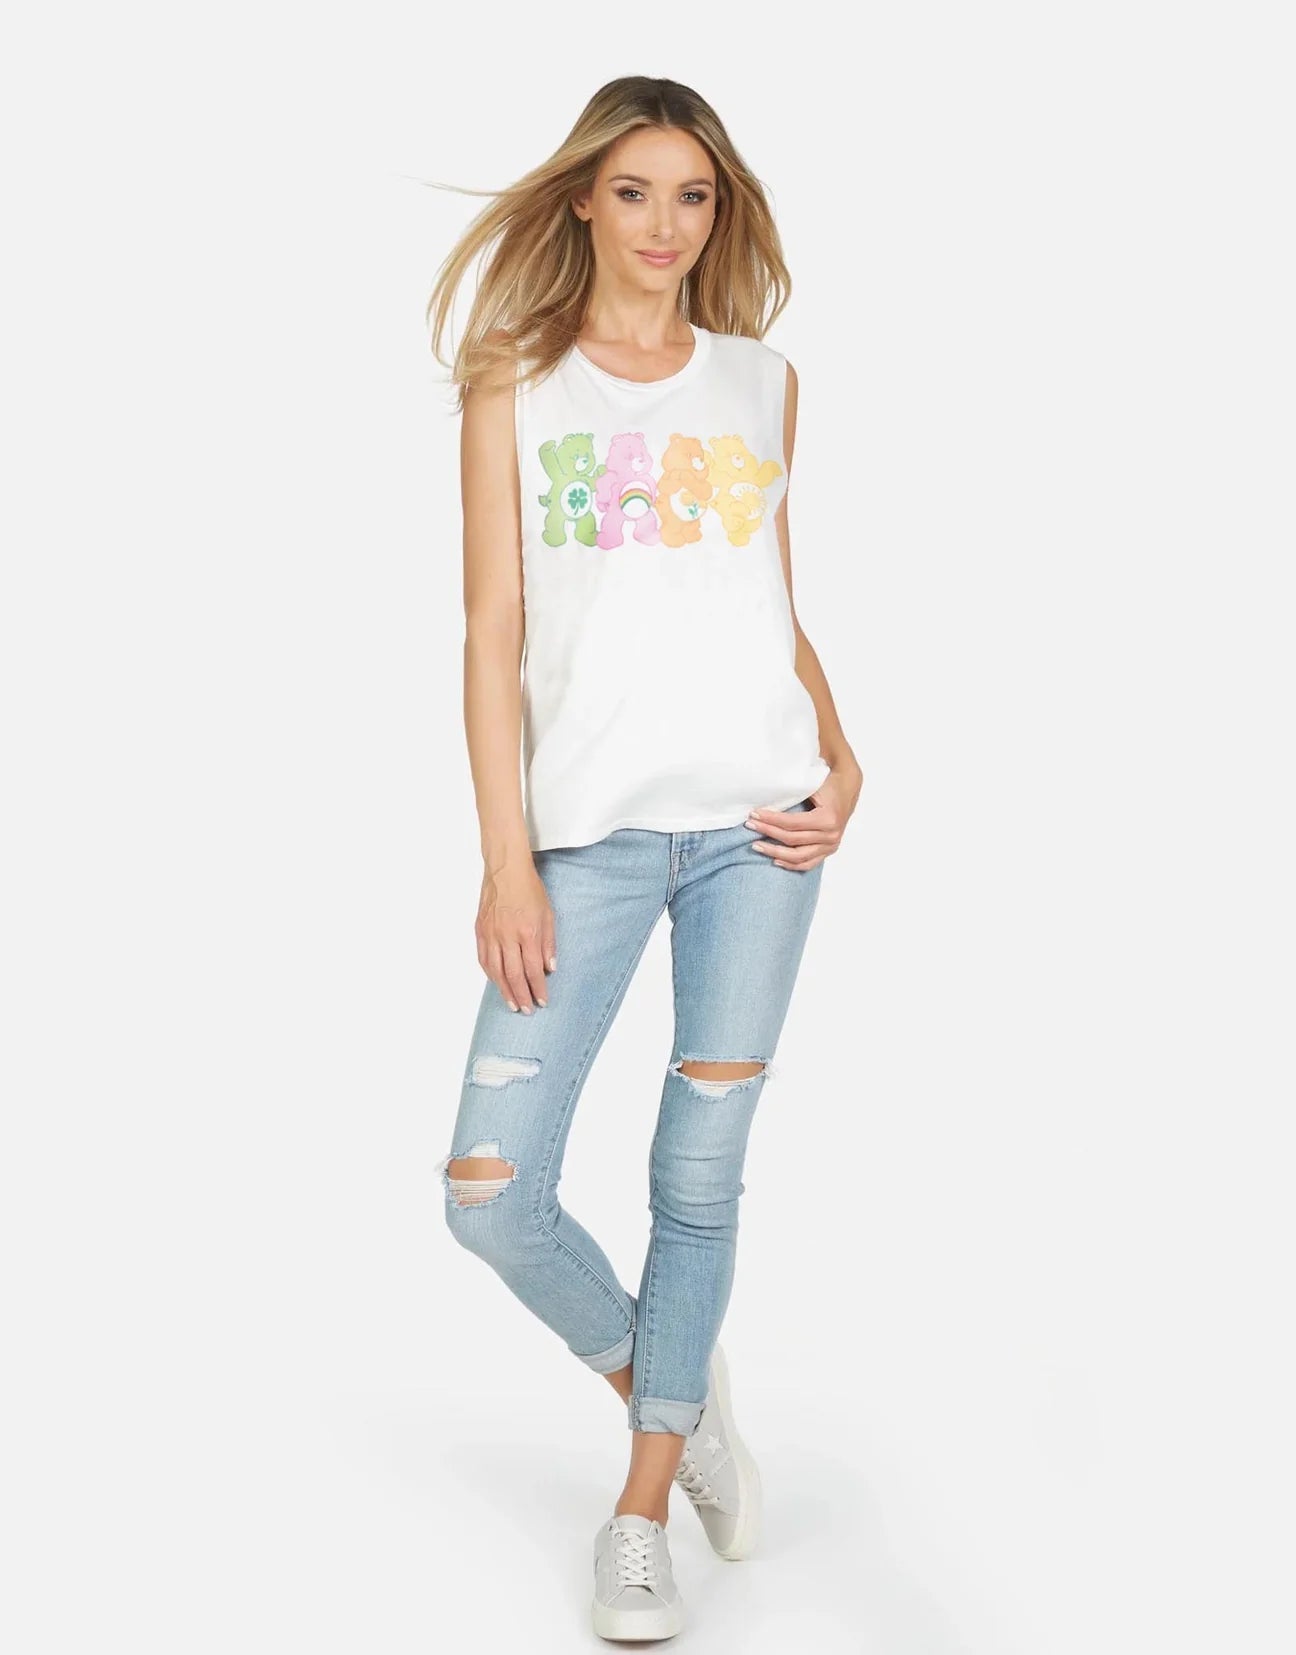 Shop Lauren Moshi Kel X Care Bears Tank Top - Premium T-Shirt from Lauren Moshi Online now at Spoiled Brat 